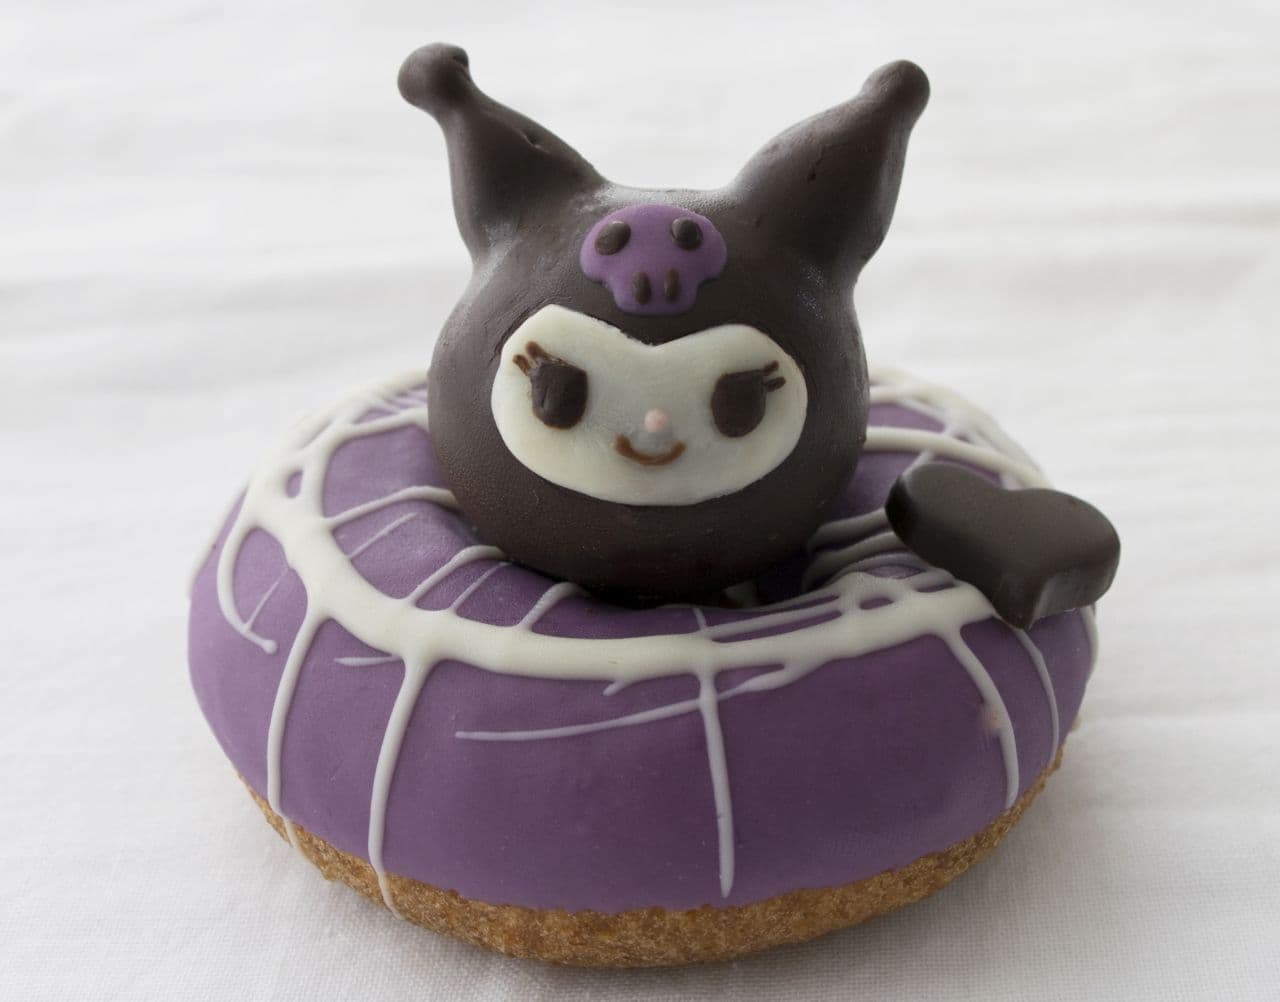 Floresta "Halloween Sanrio Character Collaboration Donuts"